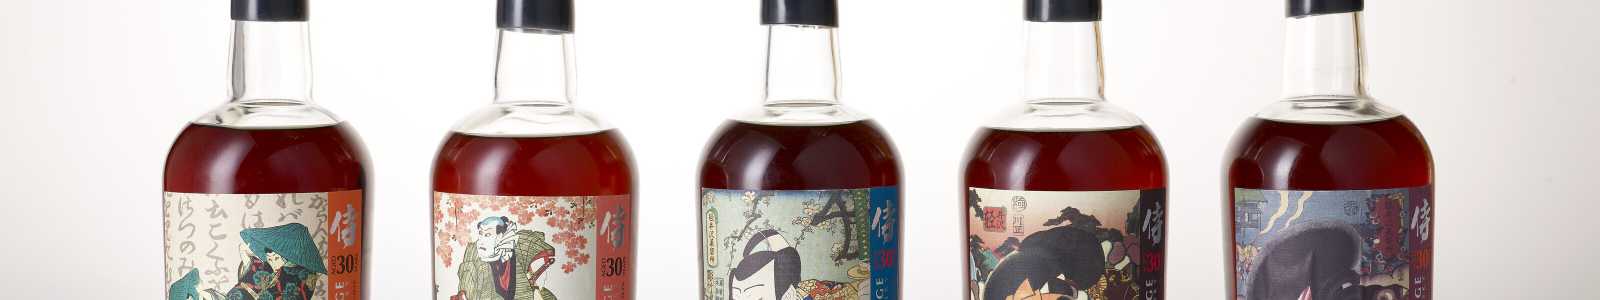 INOCHI NO MIZU: A Stunning Collection of Japanese Whisky